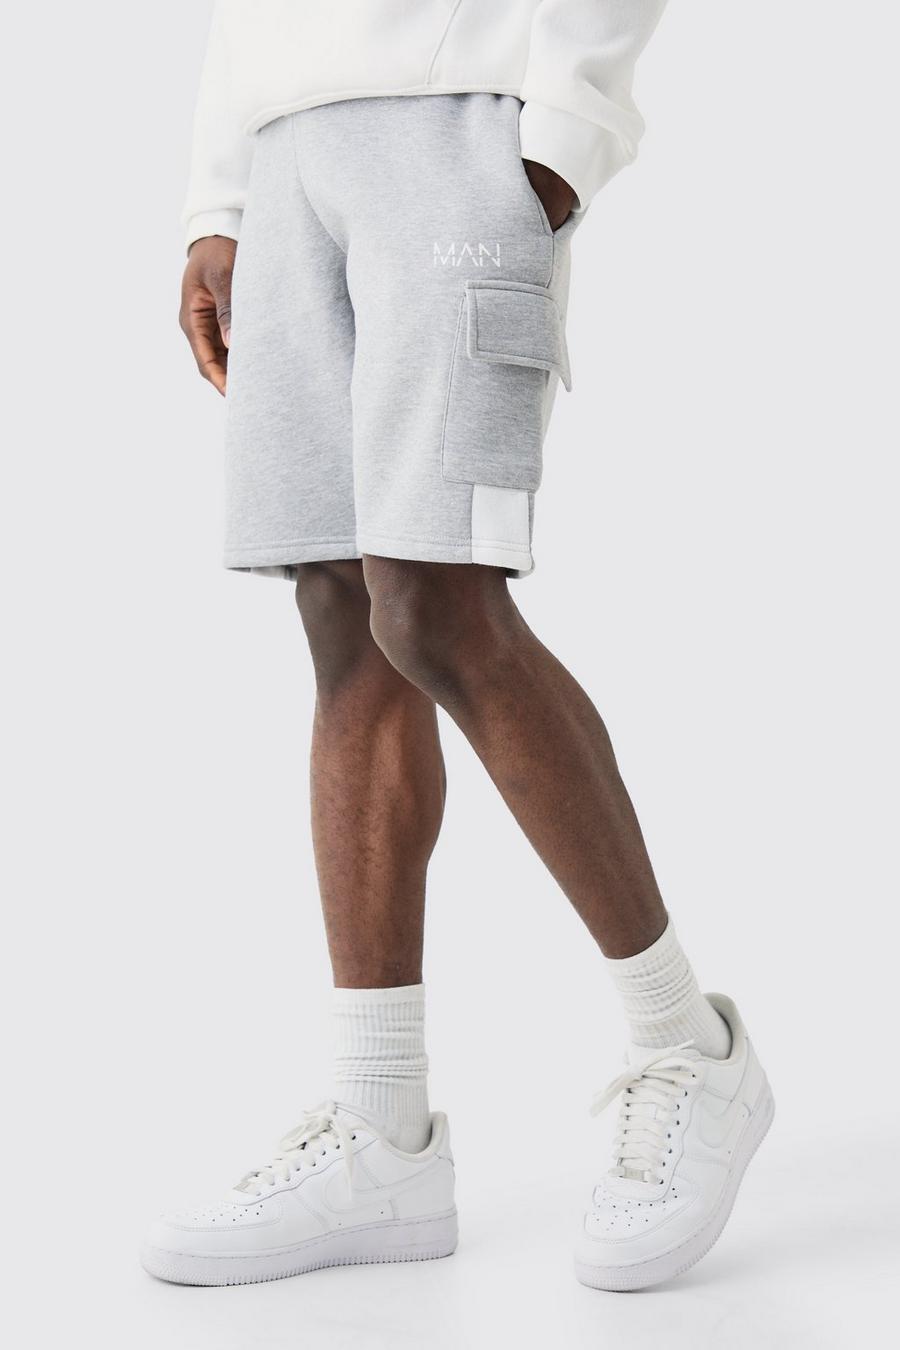 Grey Man Gusset Colour Block Pixel Camo Slim Mid Length Shorts image number 1